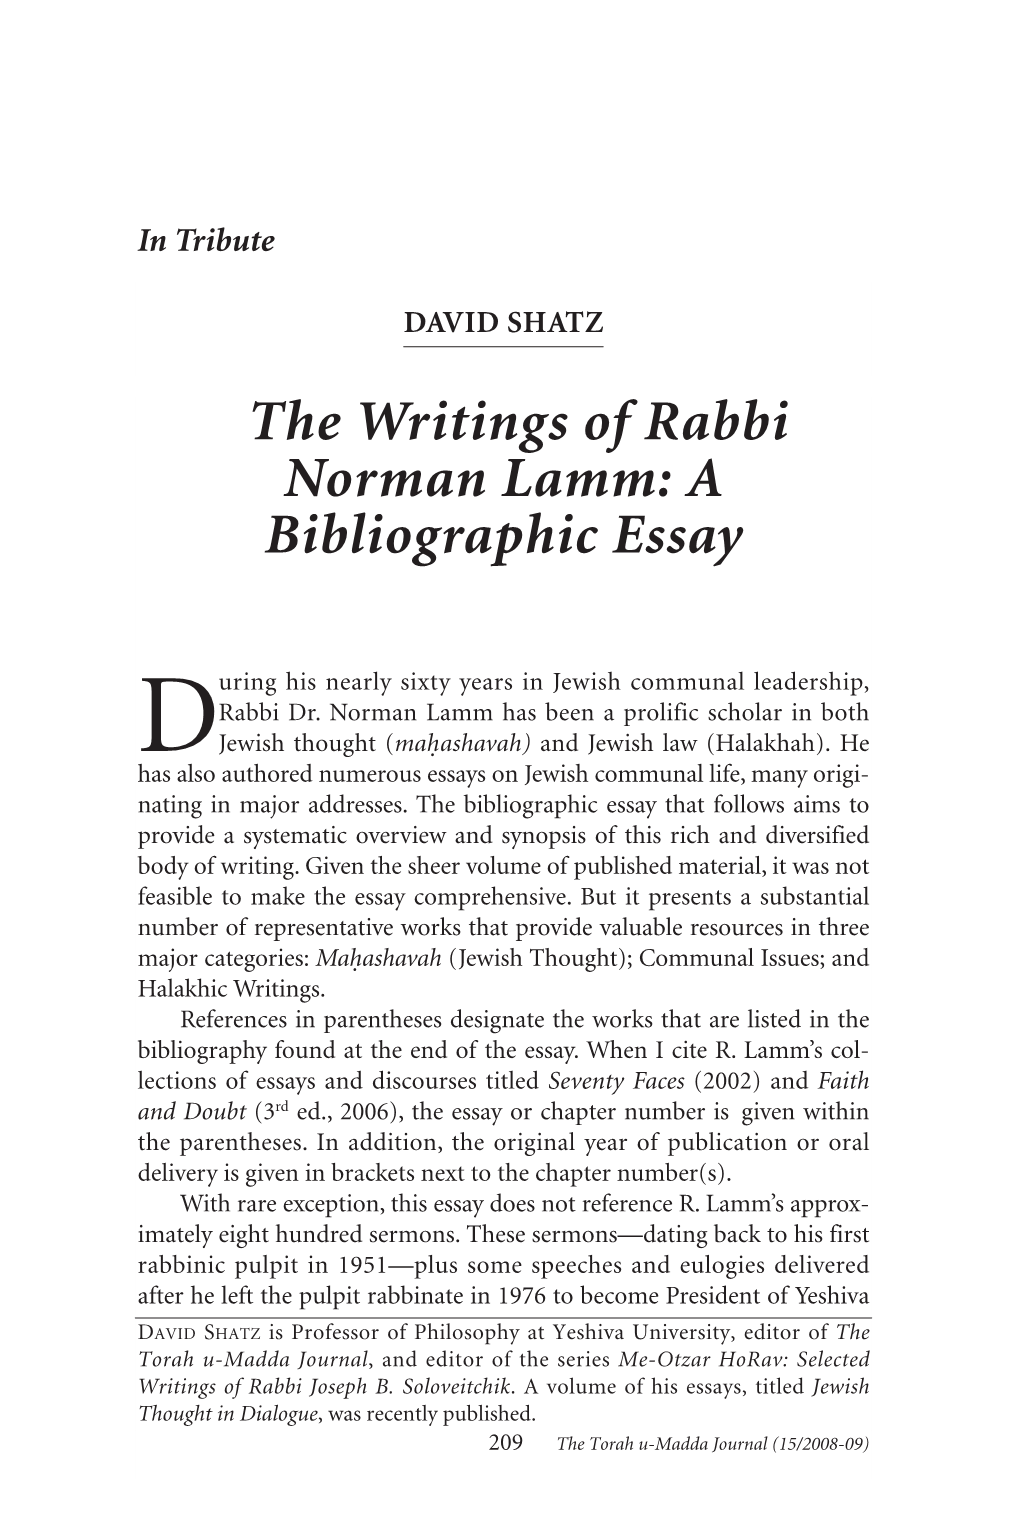 The Writings of Rabbi Norman Lamm: a Bibliographic Essay